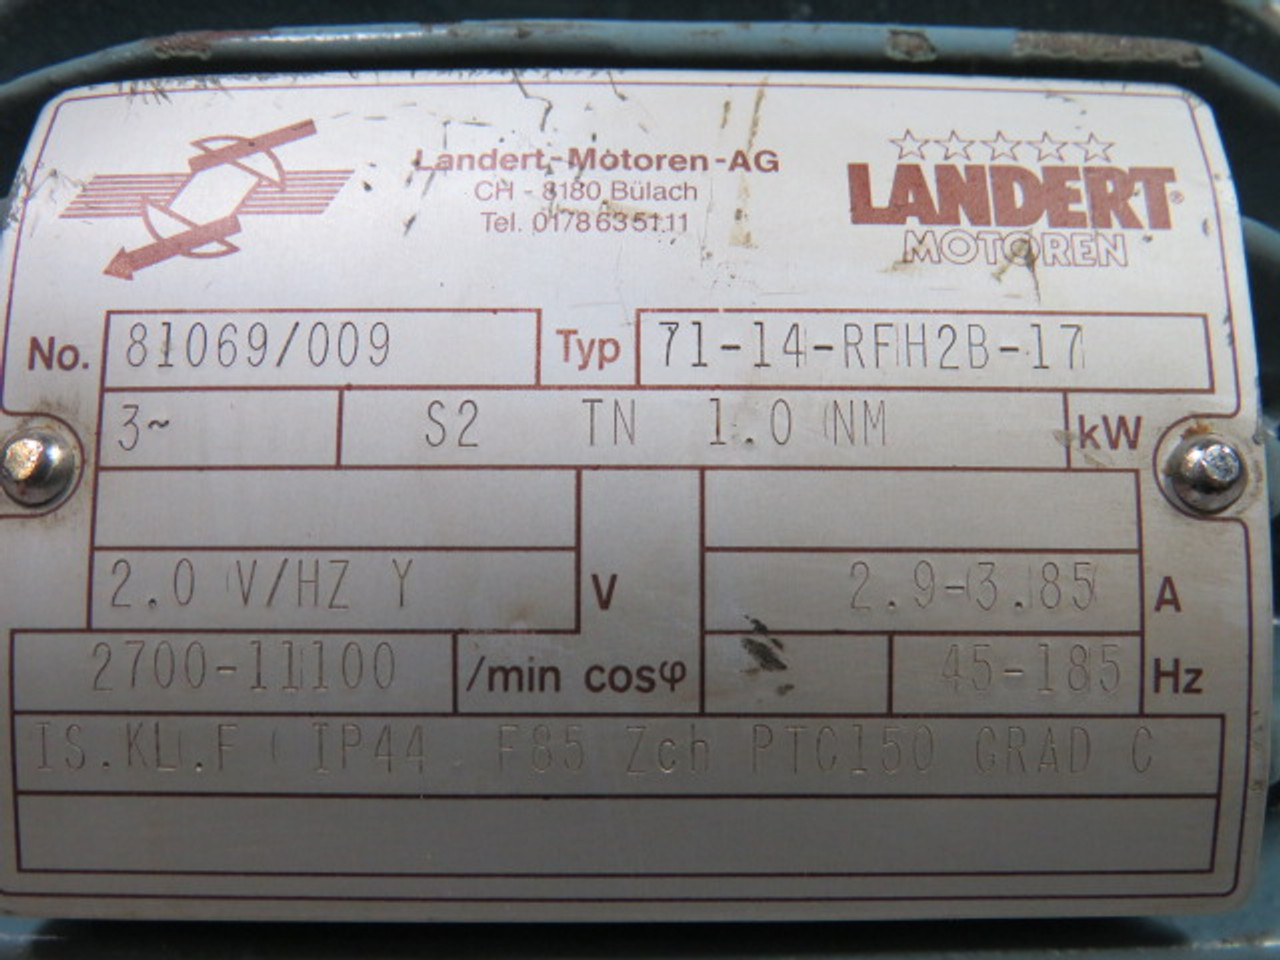 Landert 1kW 2700-11100RPM 2.0V TEFC 3Ph 2.9-3.85A 45-185Hz USED